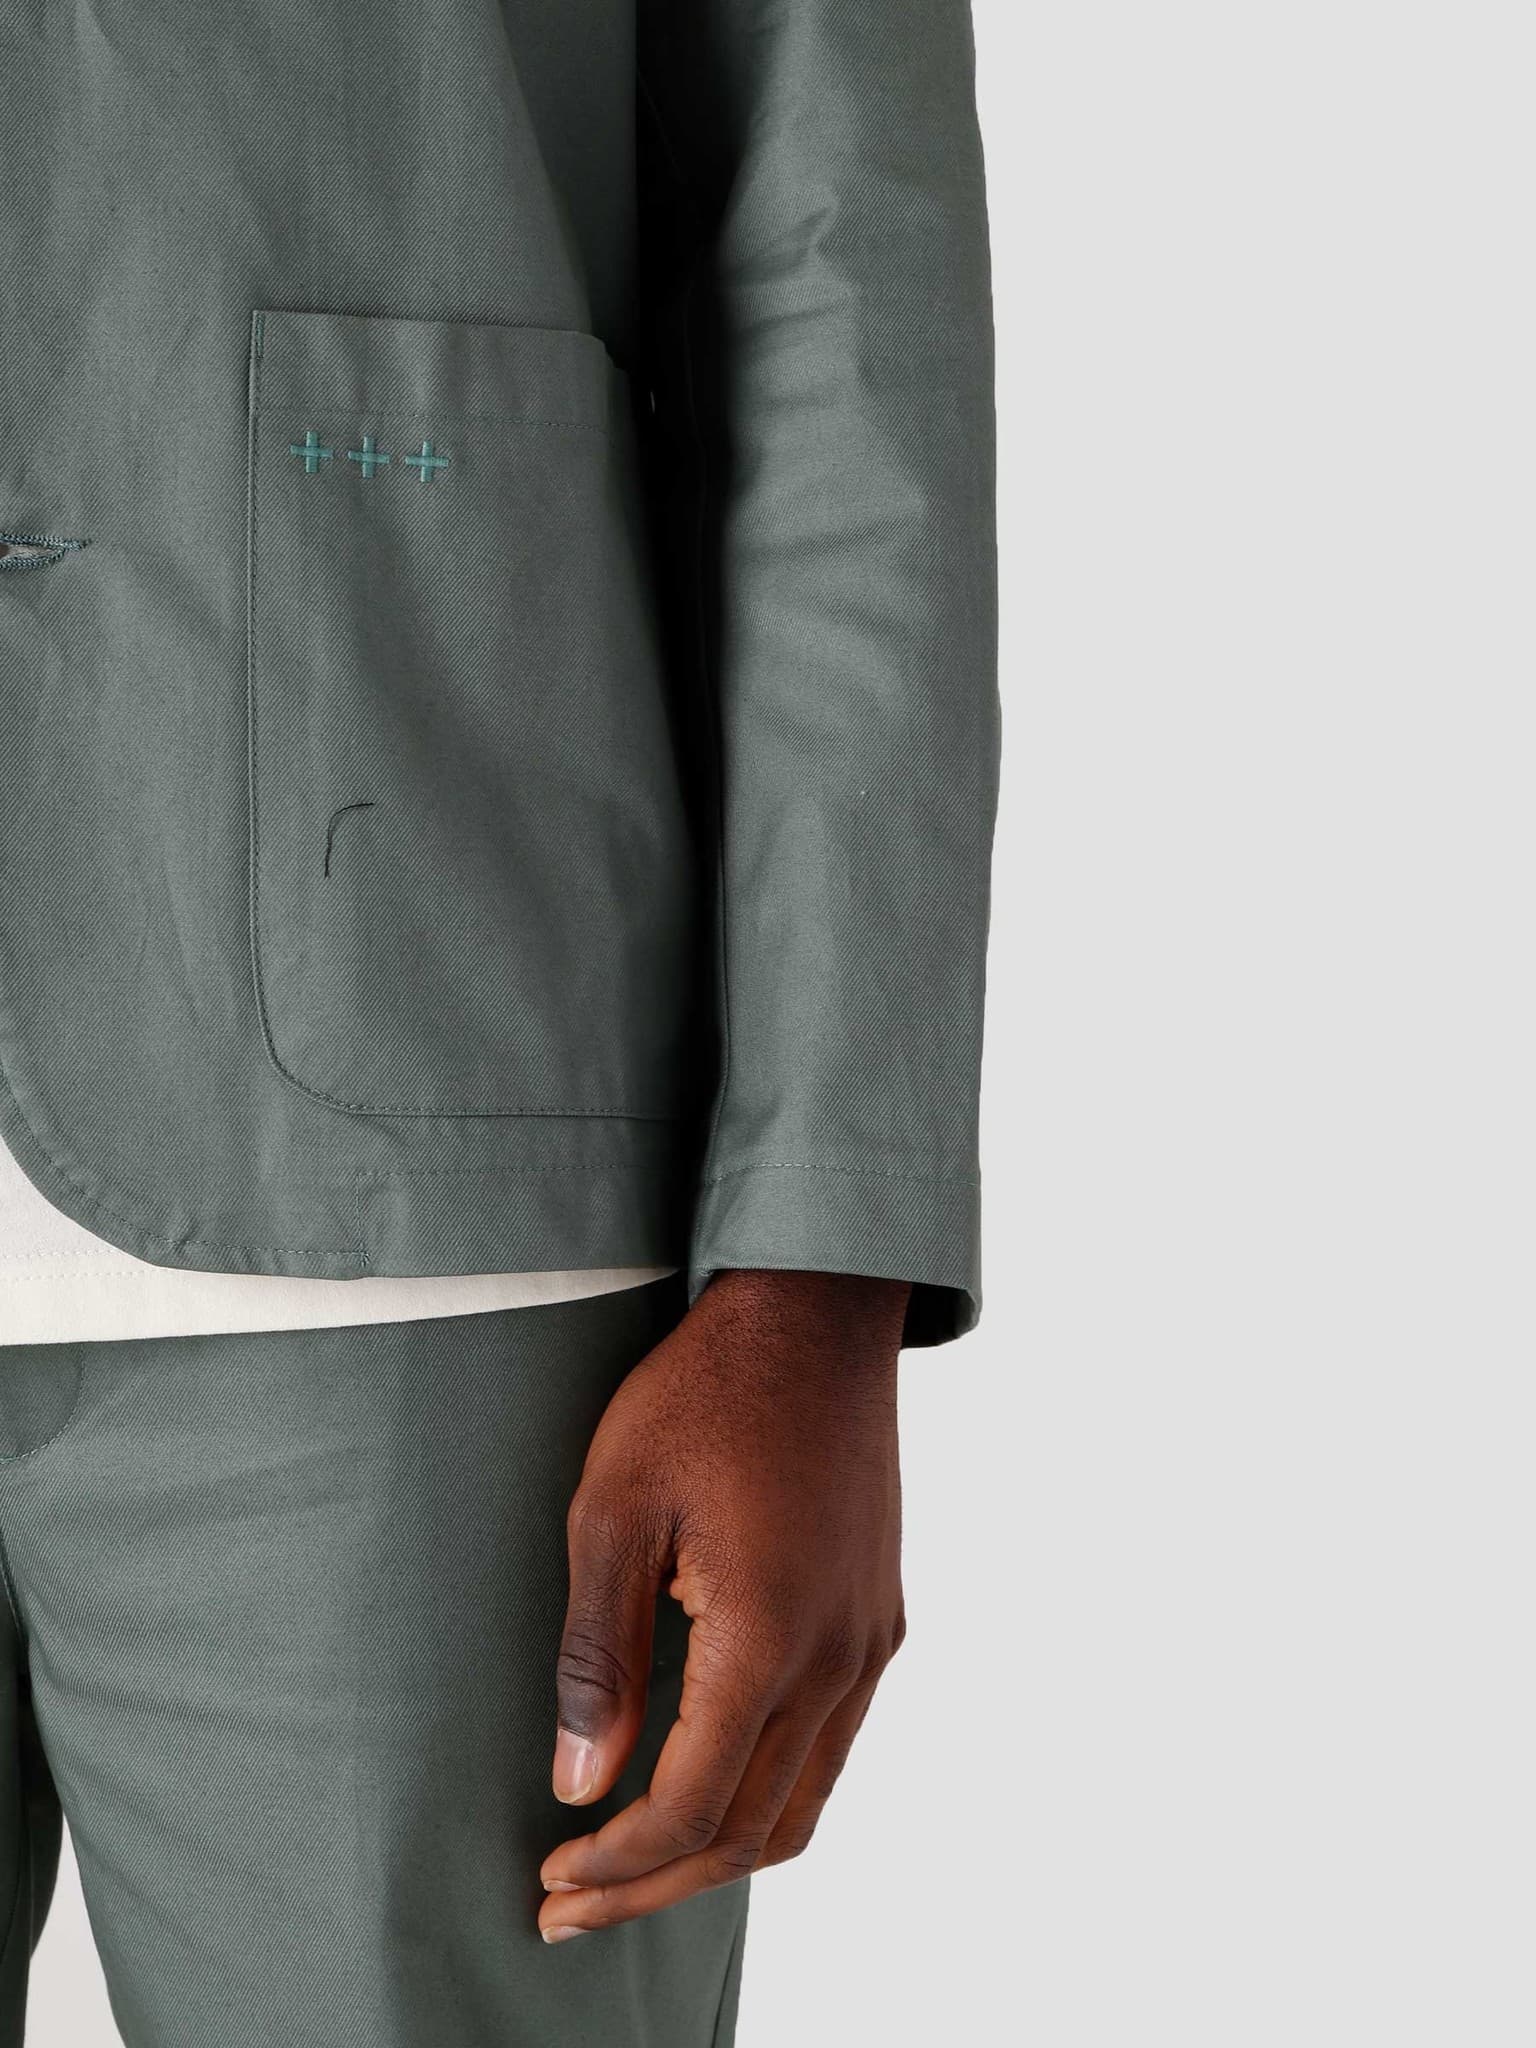 QB208 Suit Jacket Olive Green